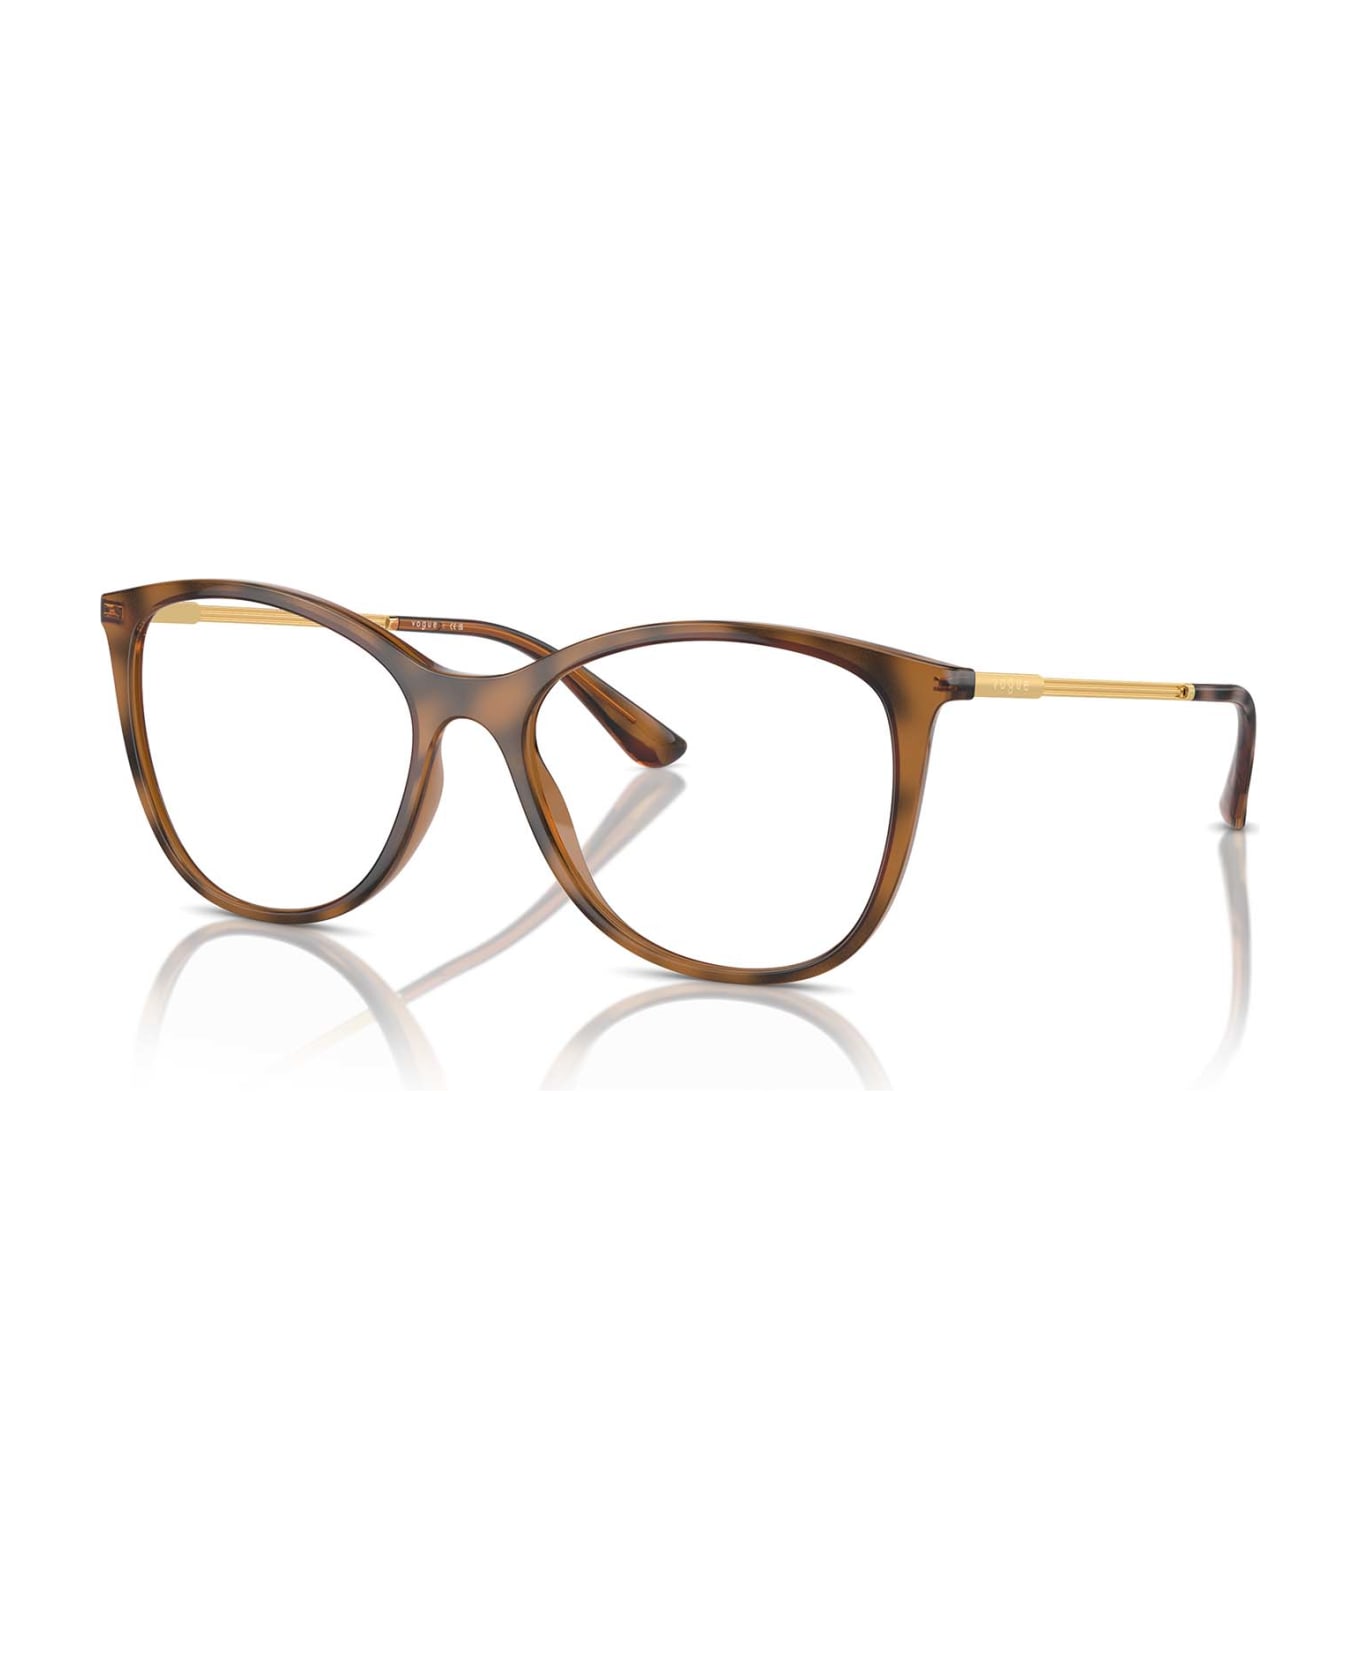 Vogue Eyewear Vo5562 Top Dark Havana / Light Brown Glasses - Top Dark Havana / Light Brown